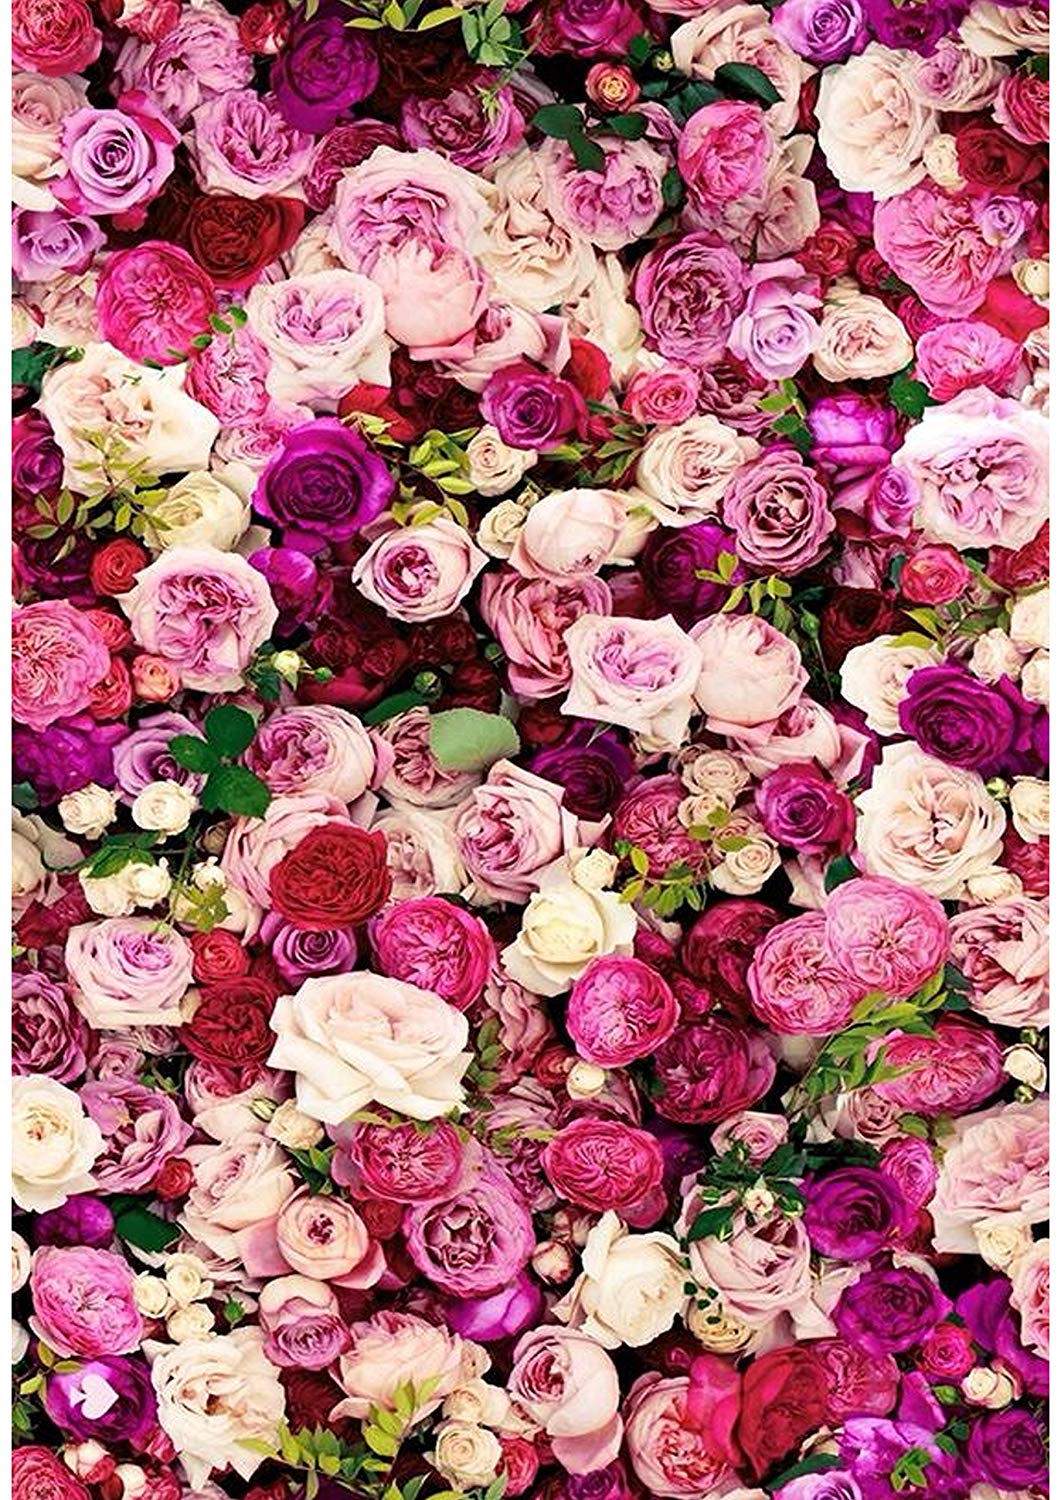 rose wallpaper,flower,pink,garden roses,rose,purple